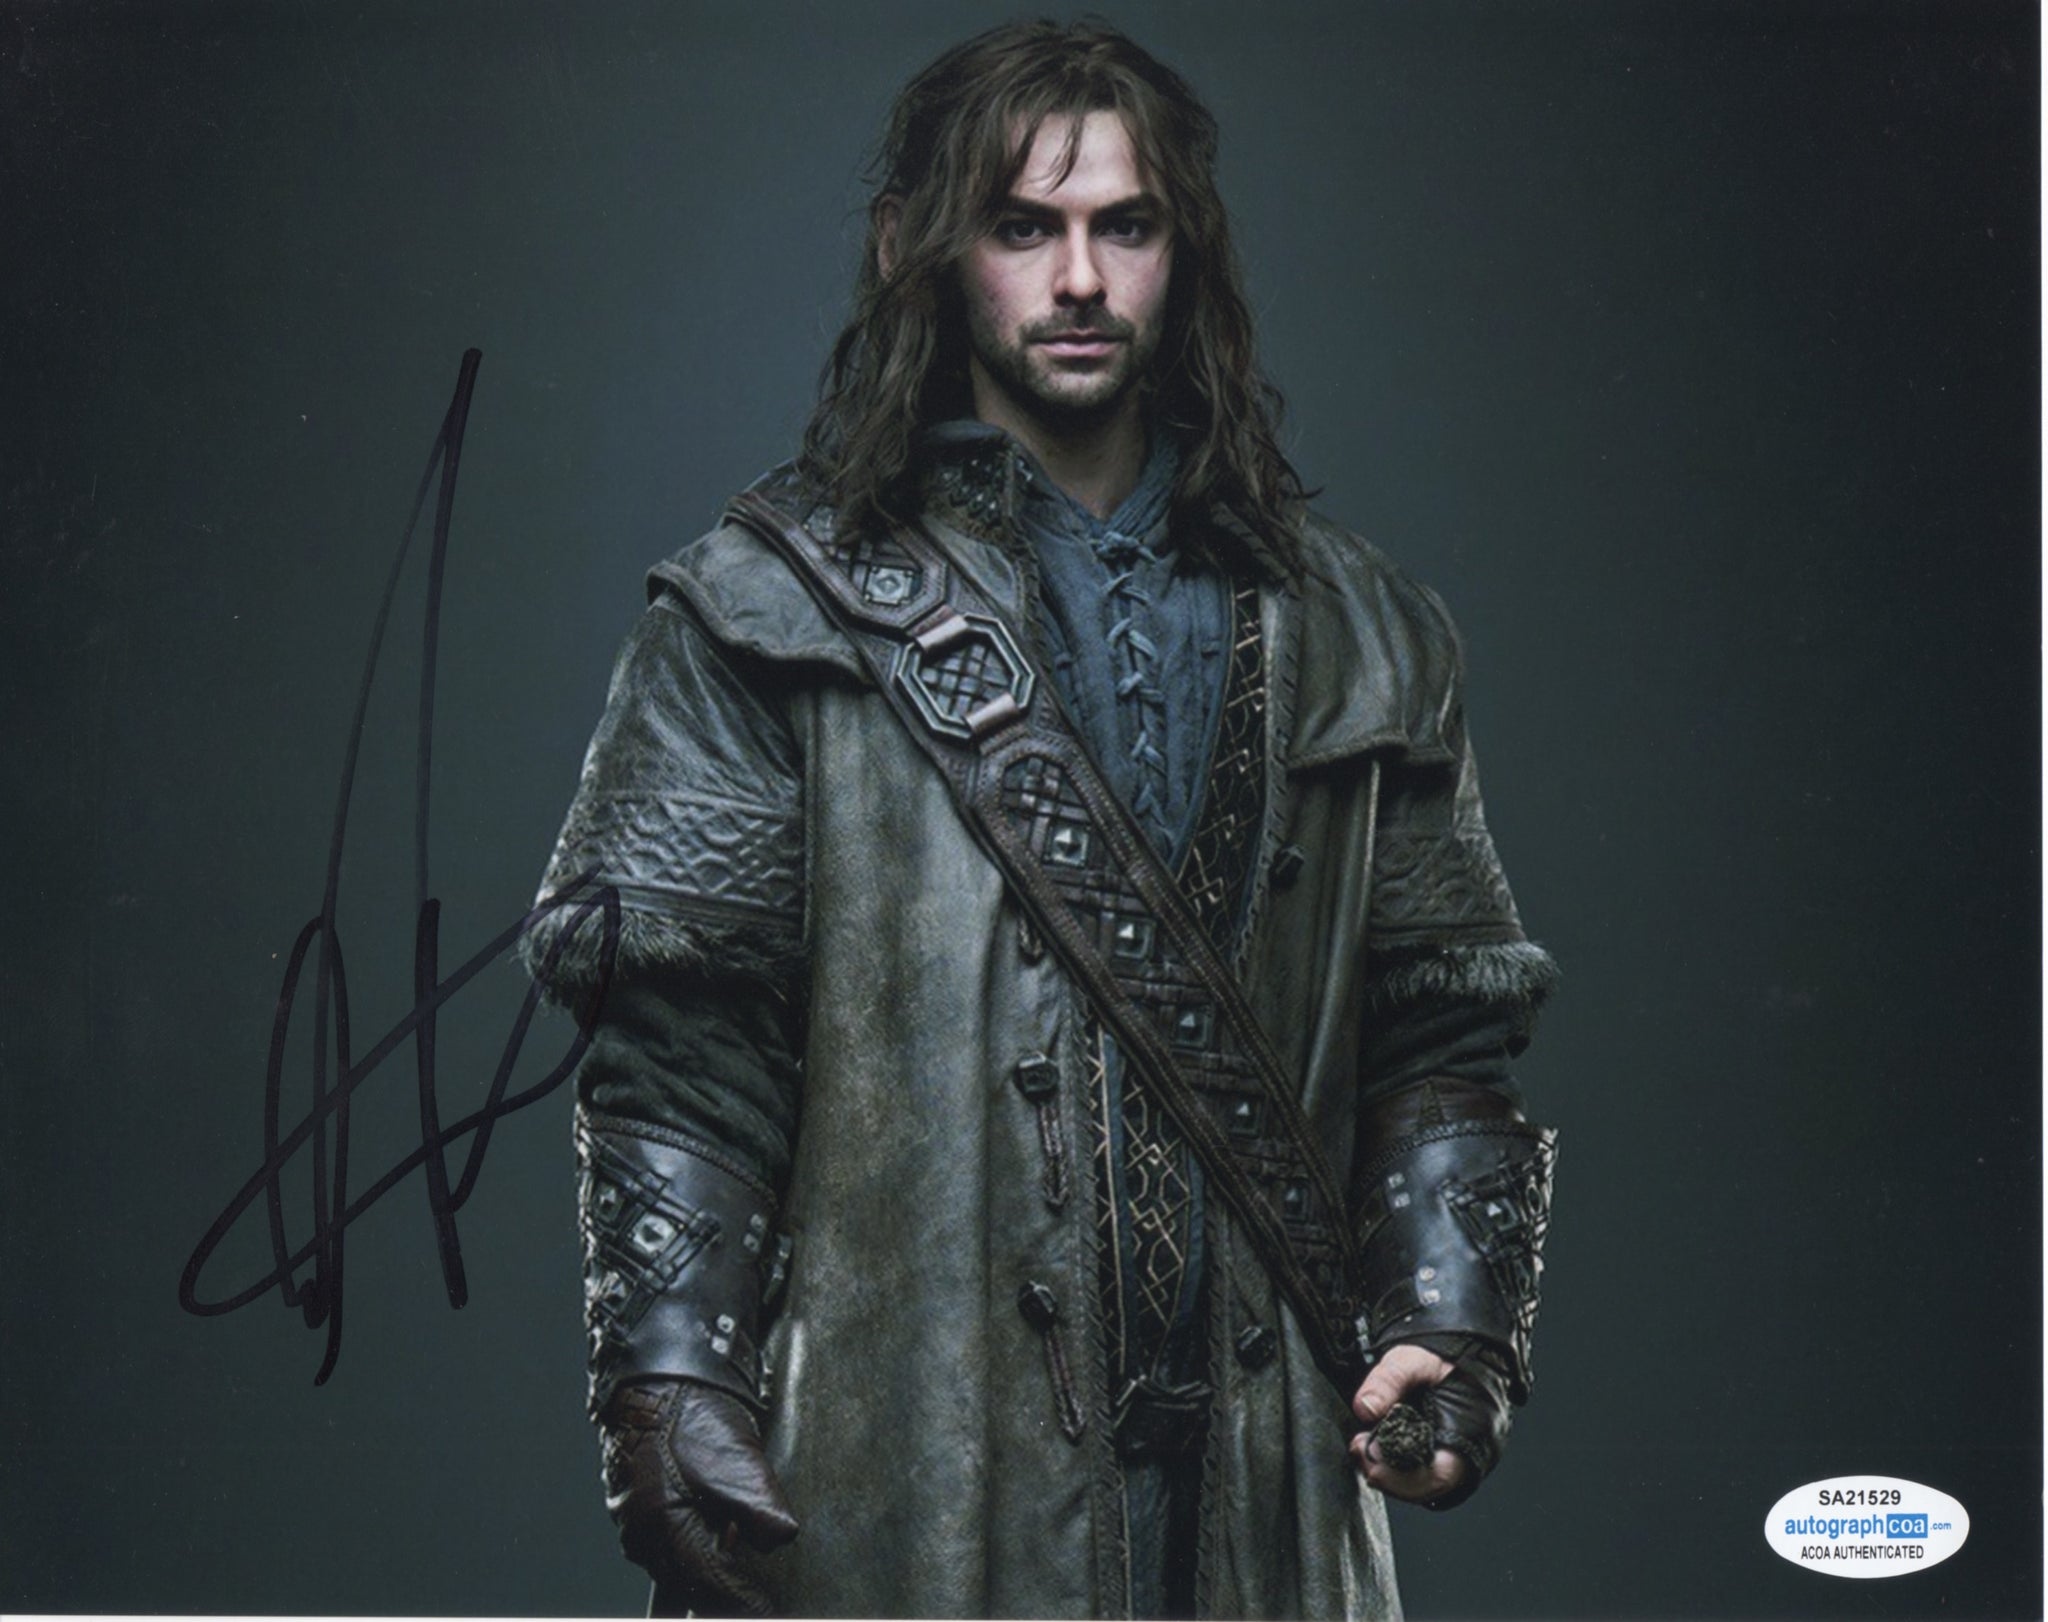 Aidan Turner The Hobbit Signed Autograph 8x10 Photo ACOA - Outlaw Hobbies Authentic Autographs